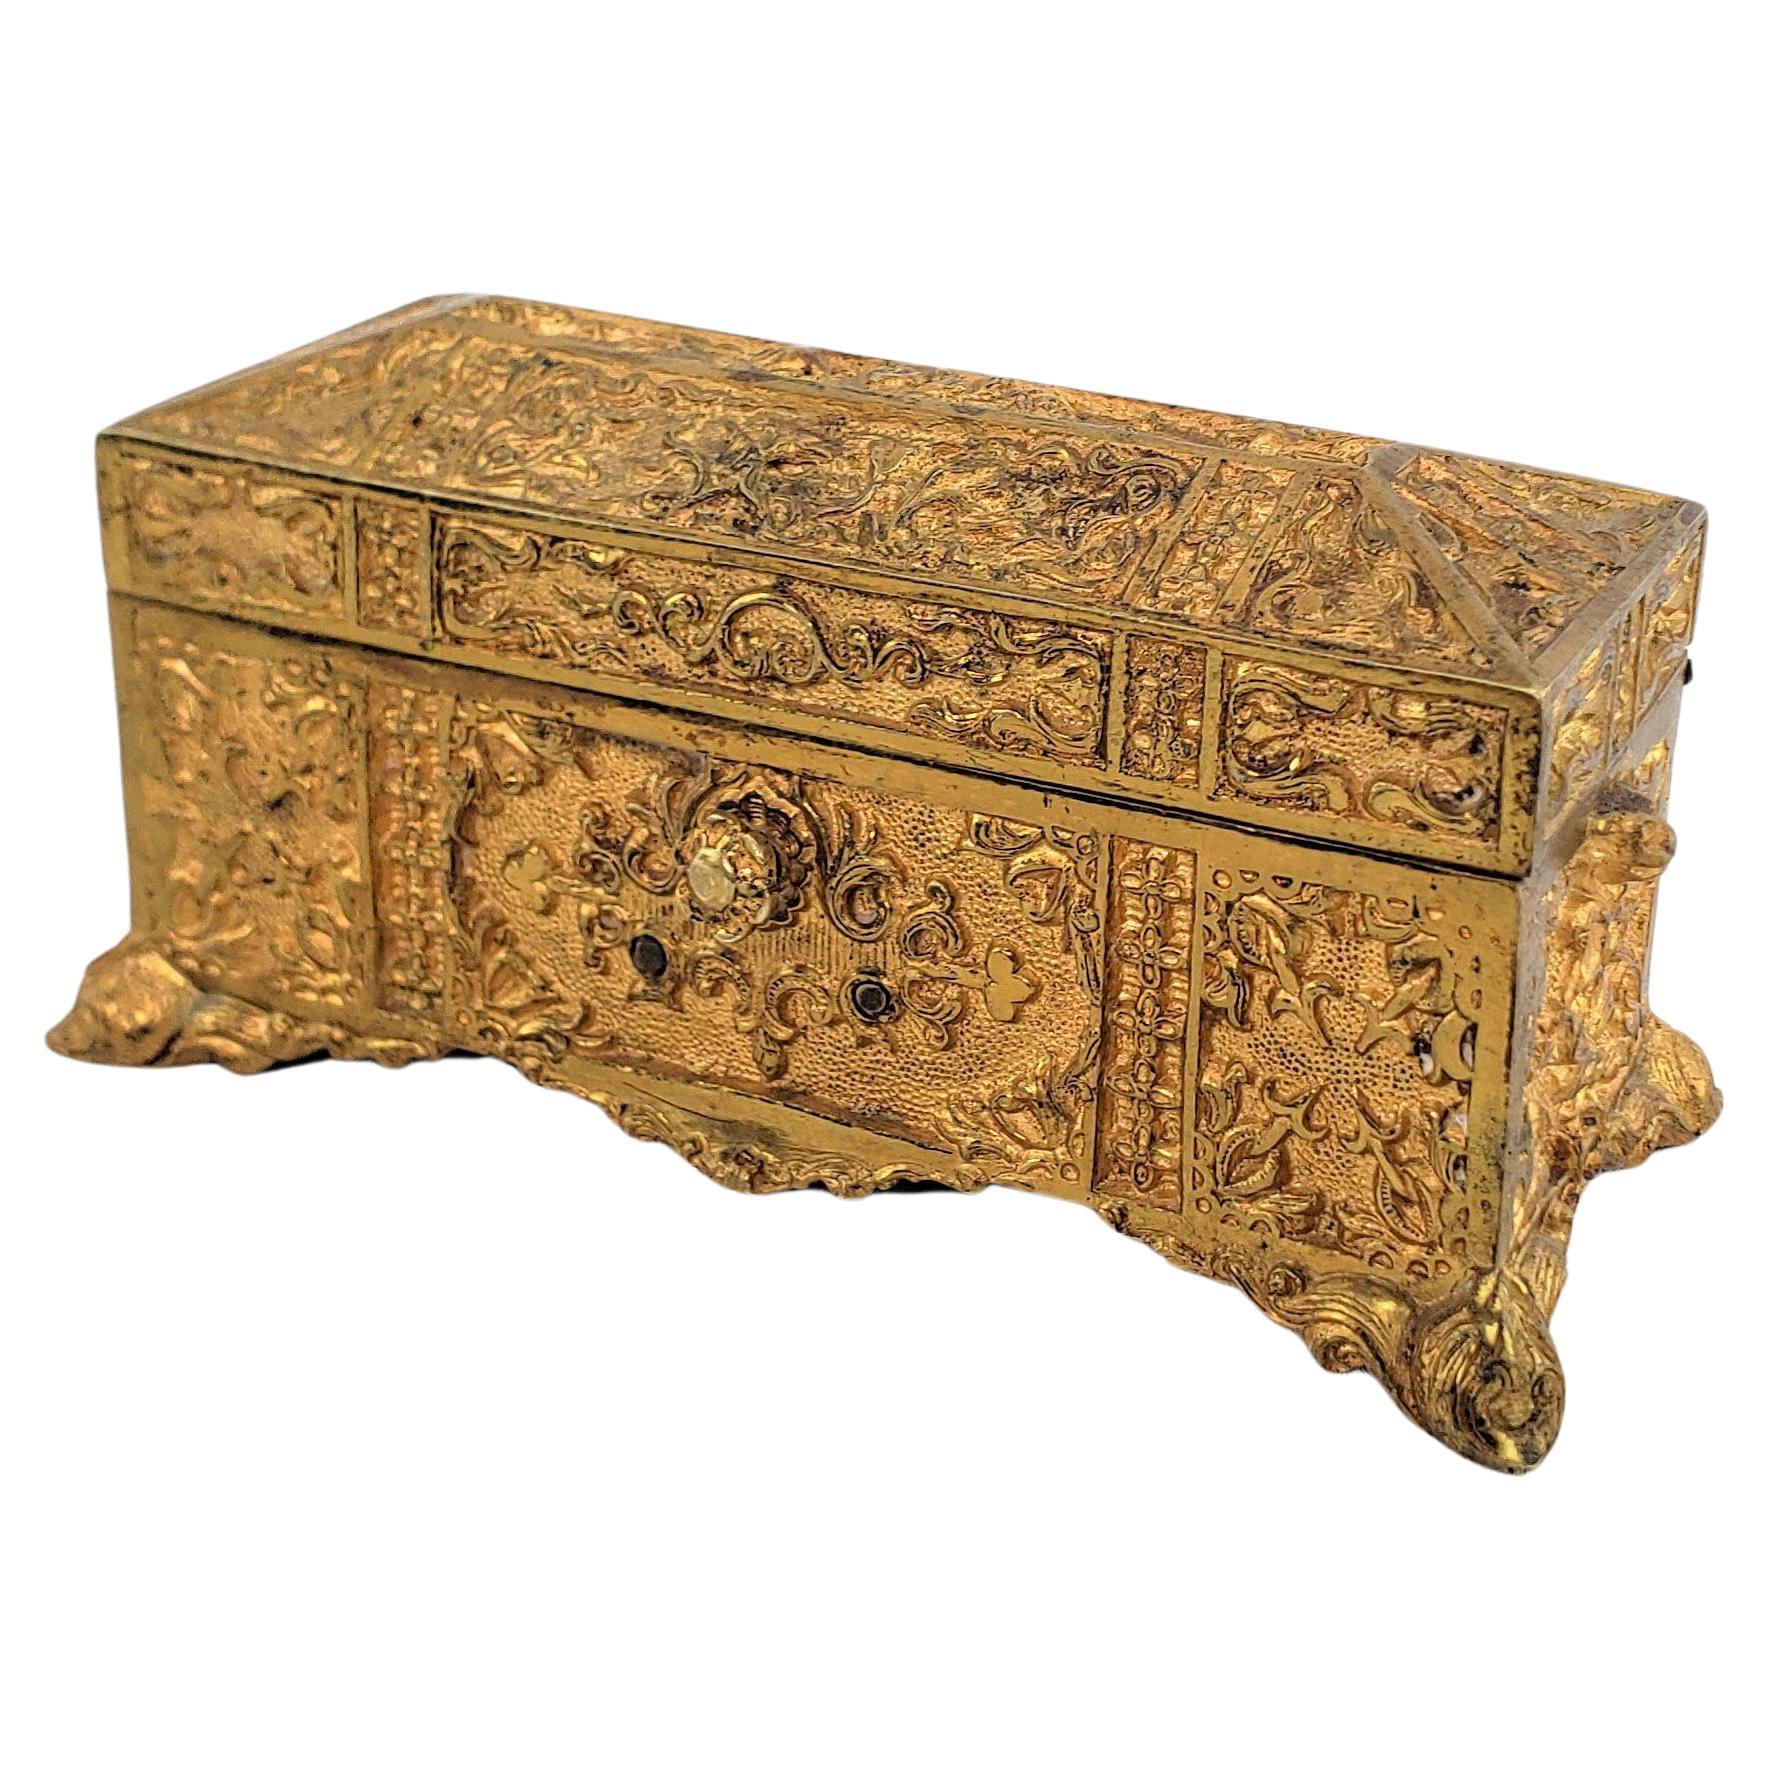 Antique Gilt Bronze Decorative Jewelry Box or Casket with Floral Decoration For Sale